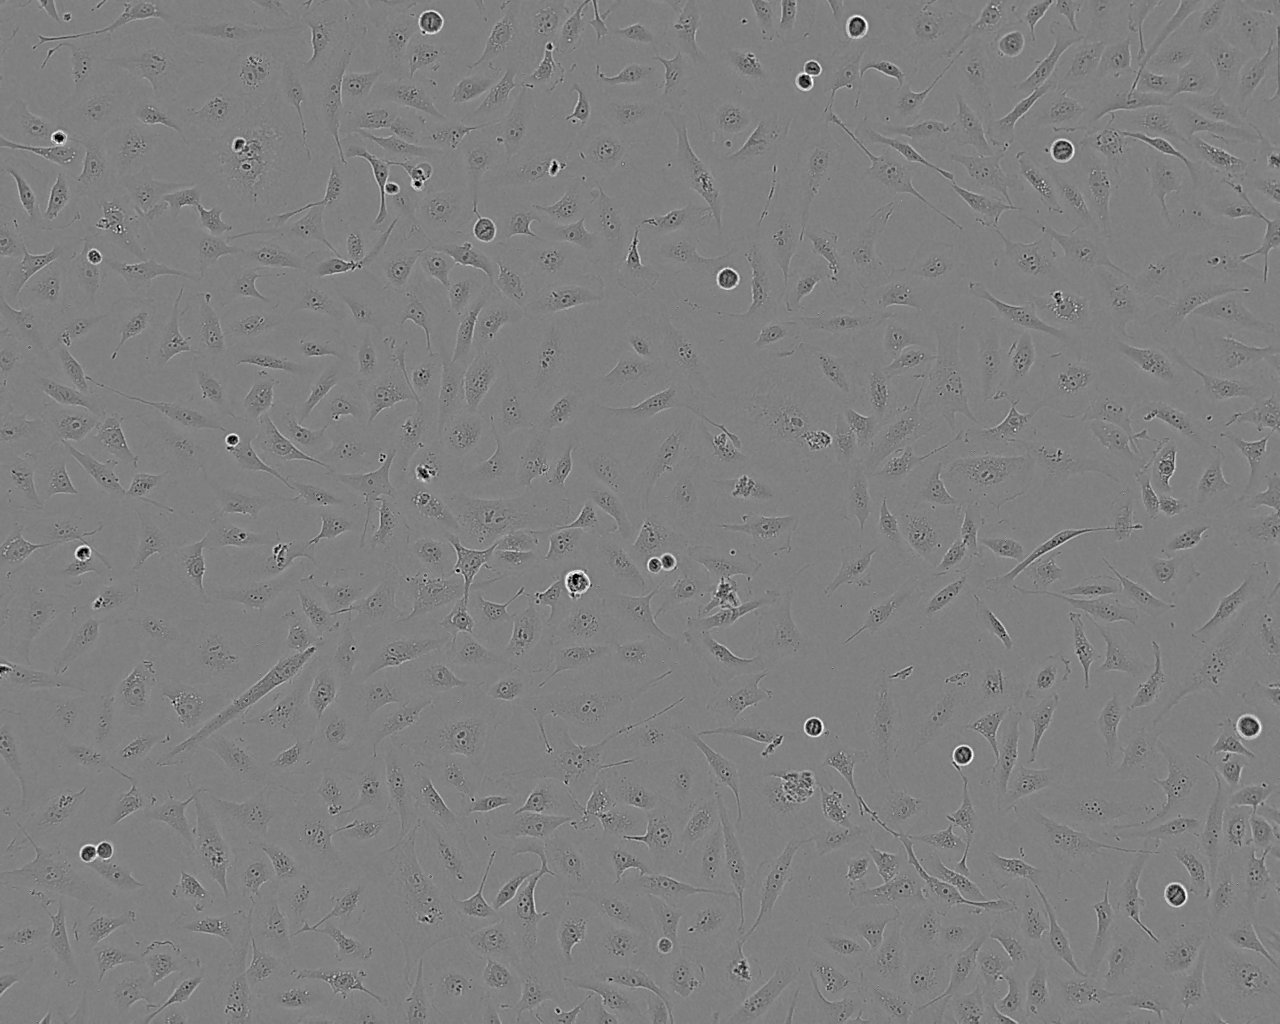 FRhK-4 恒河猴胚肾细胞系,FRhK-4